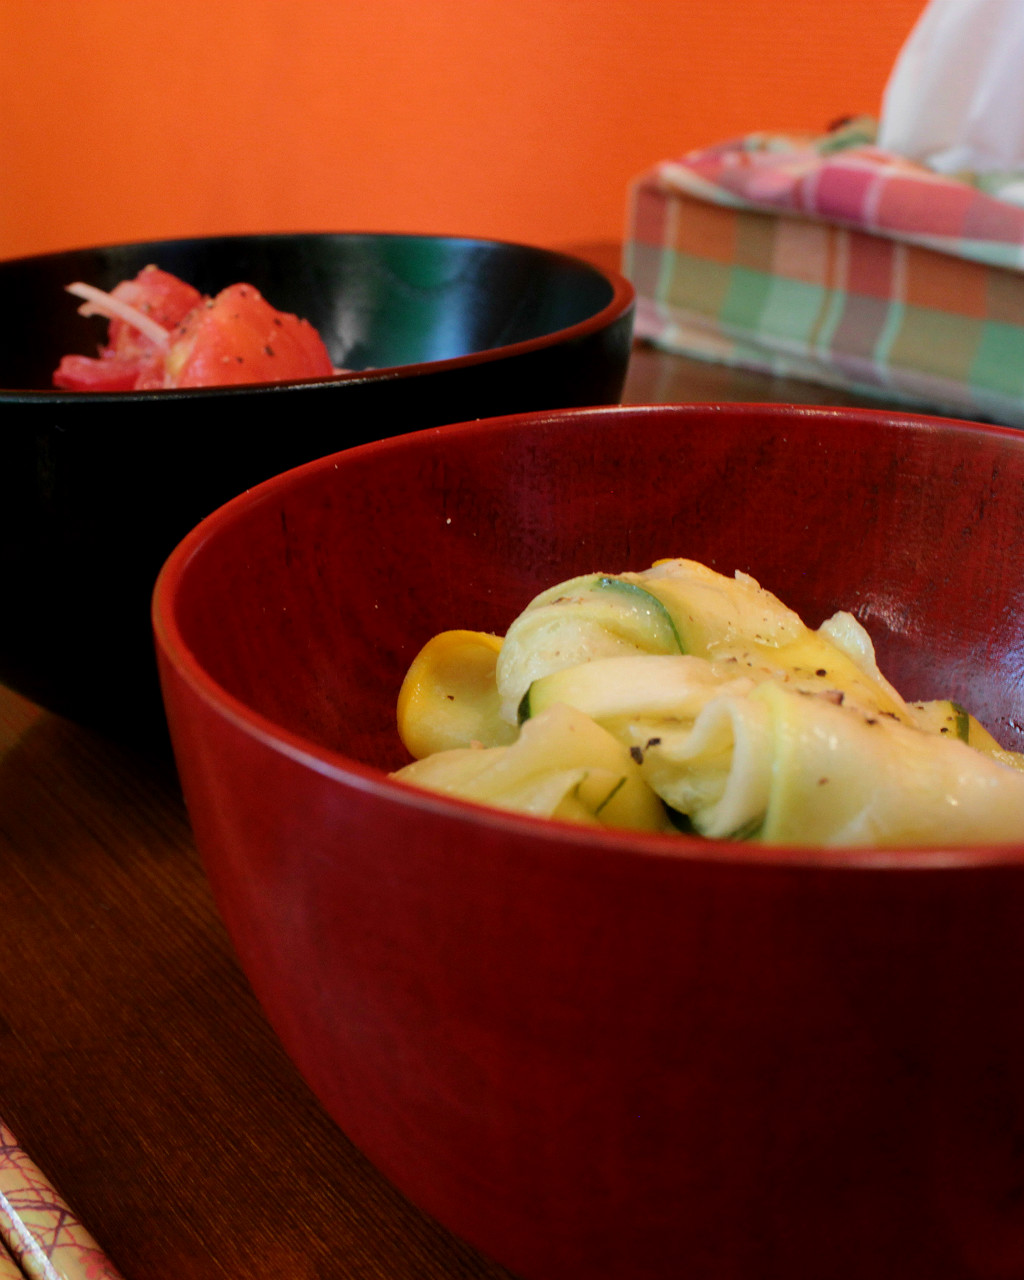 Zucchini and tomato salad starters